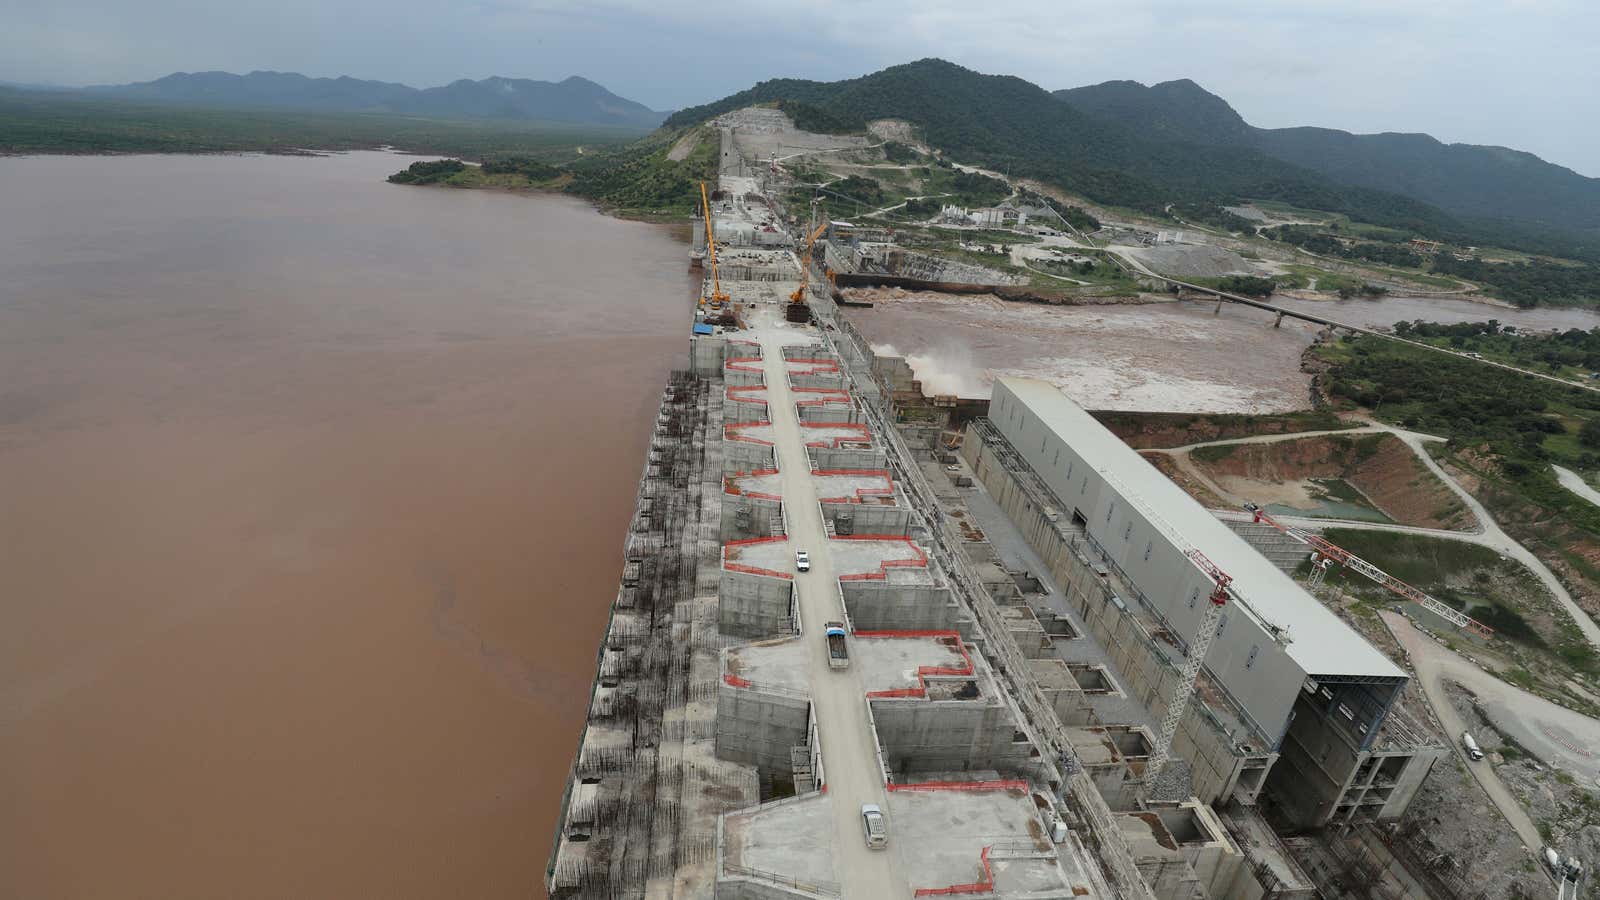 Under construction. Ethiopia’s Grand Renaissance Dam